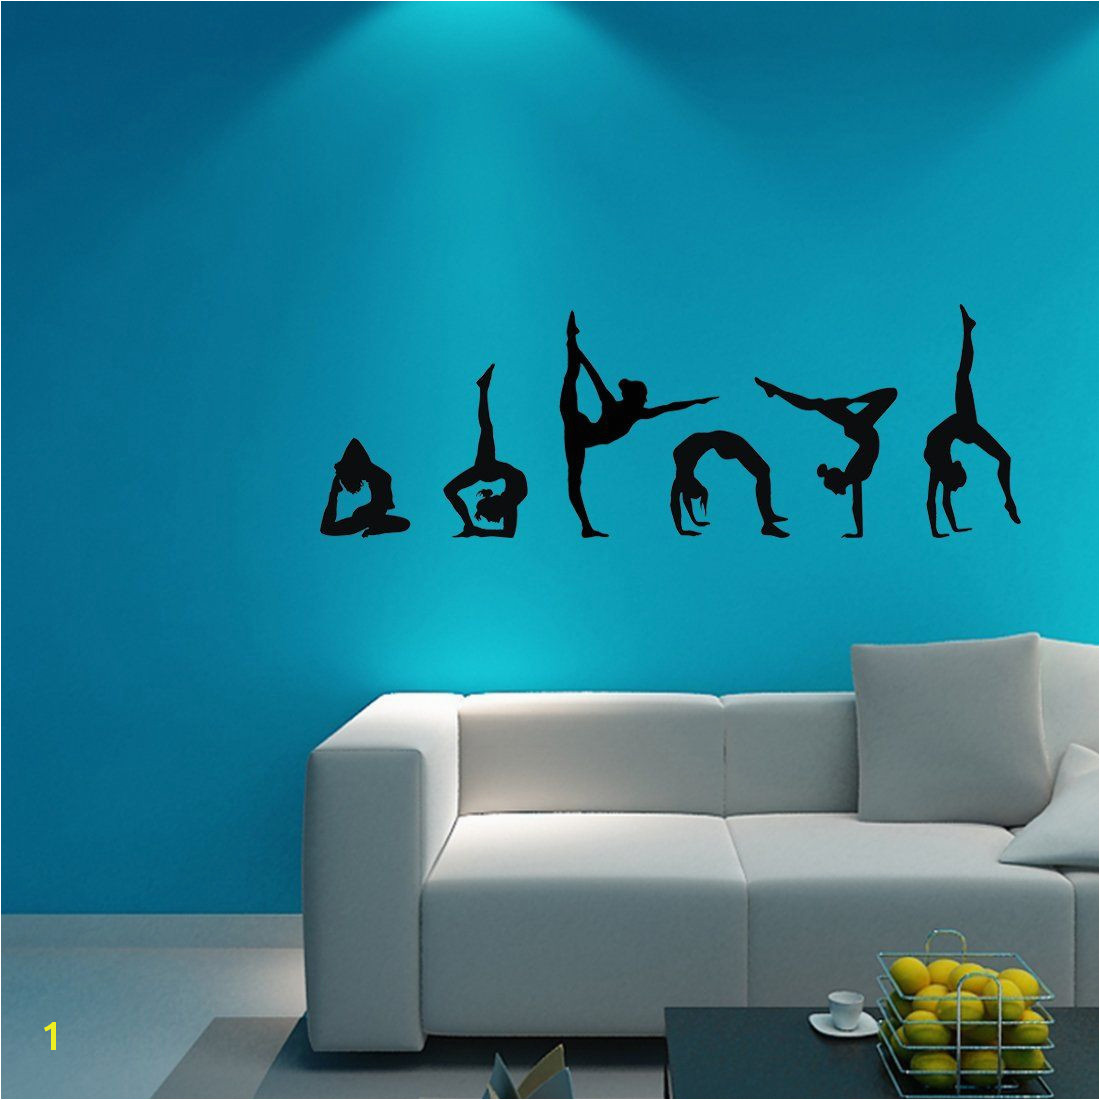 Easma Gymnastics Wall Decals Silhouettes Sport Art Girl Vinyl Decals Wall Sticker For Kids Room Decor